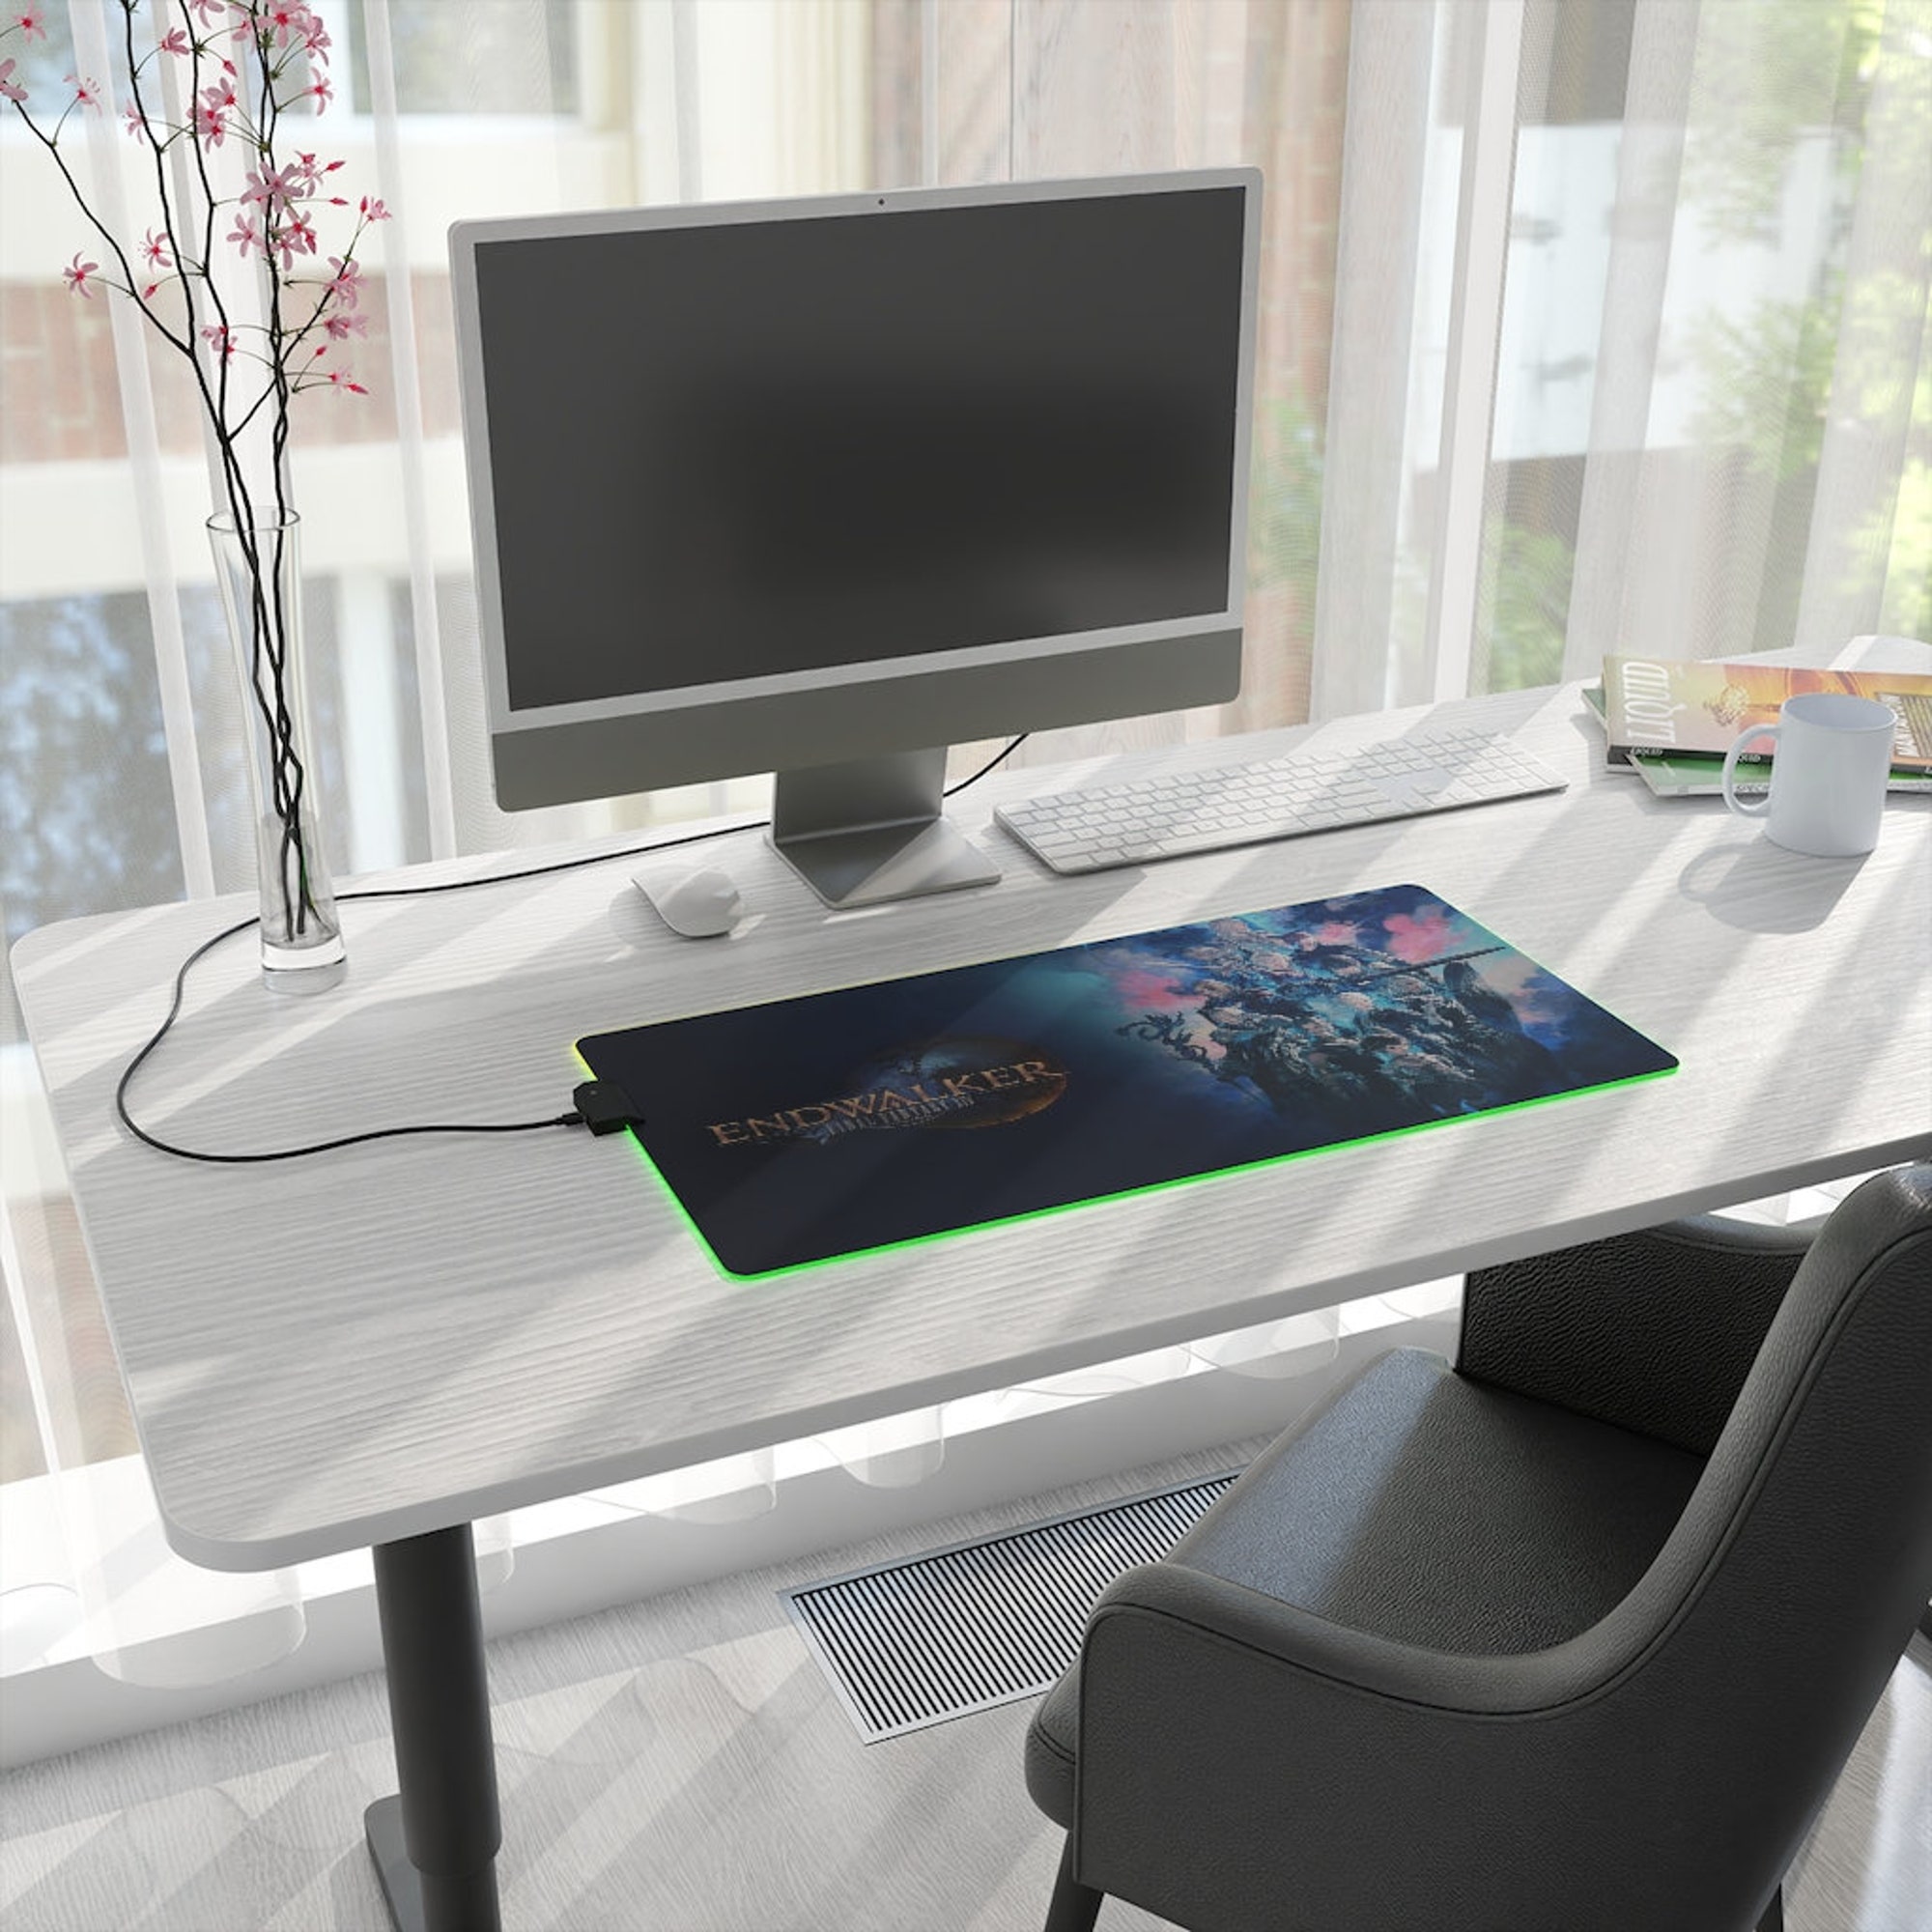 Final Fantasy XIV Endwalker RGB Mouse Pad | FFXIV Led Desk Mat